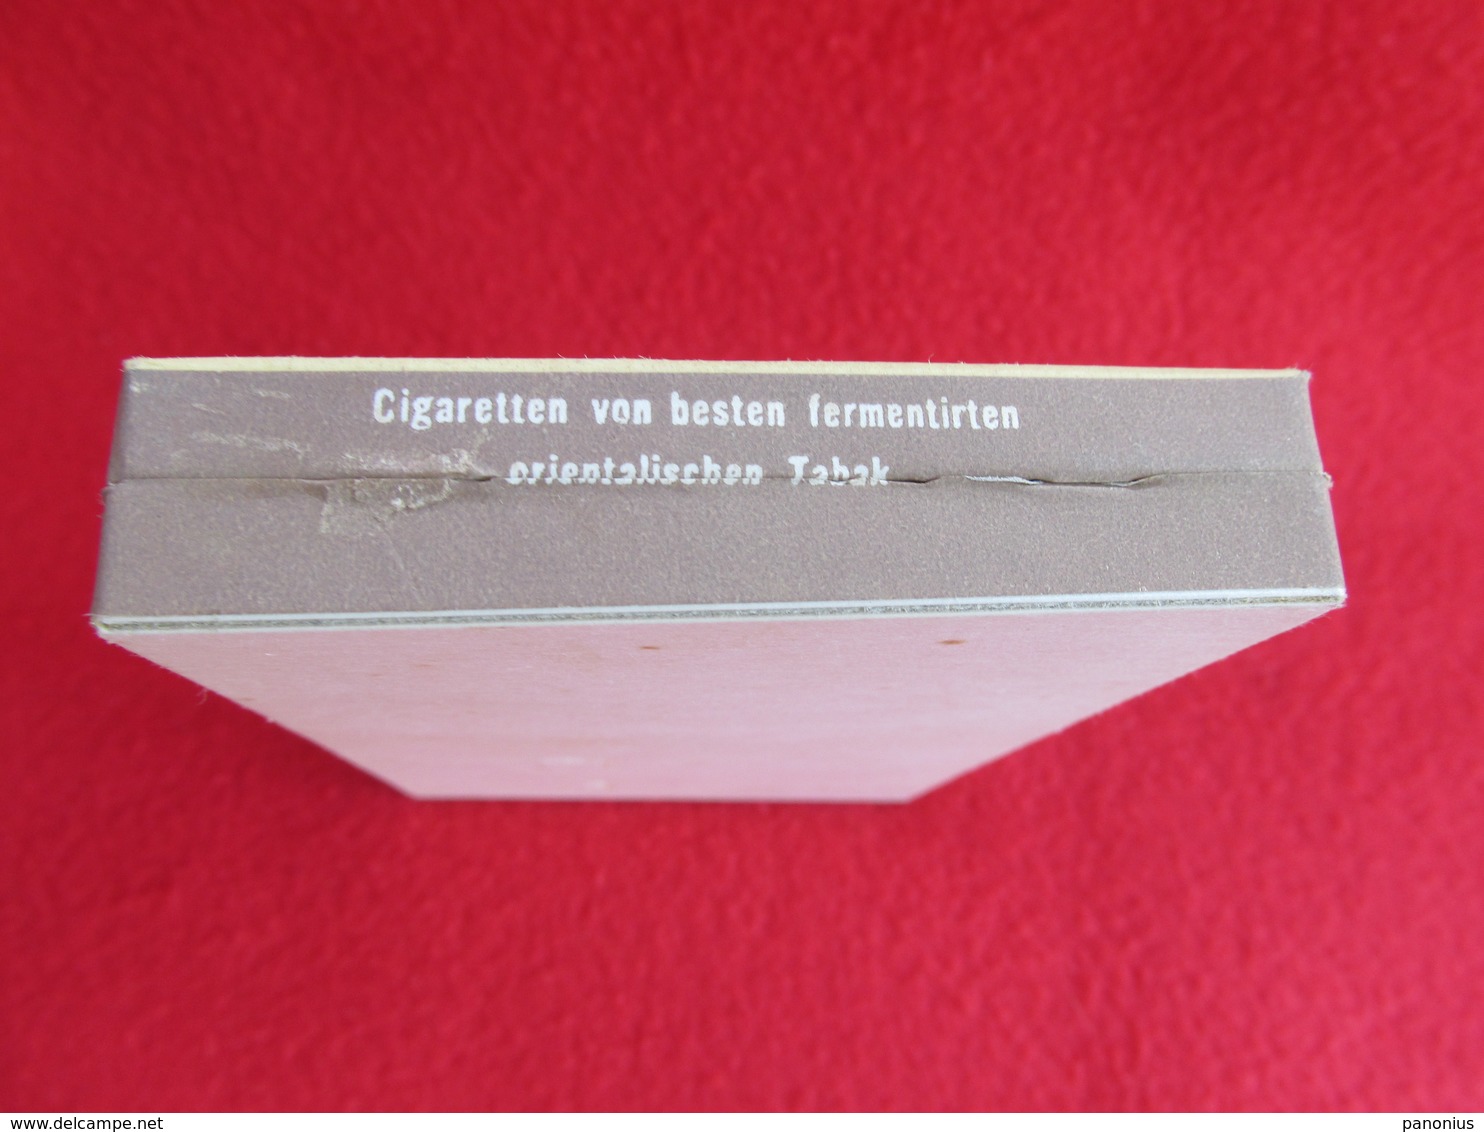 TOBACCO VINTAGE CARDBOARD BOX  JADRAN - FACTORY TITOGRAD MONTENEGRO WITH CIGARETTES INSIDE - Empty Tobacco Boxes